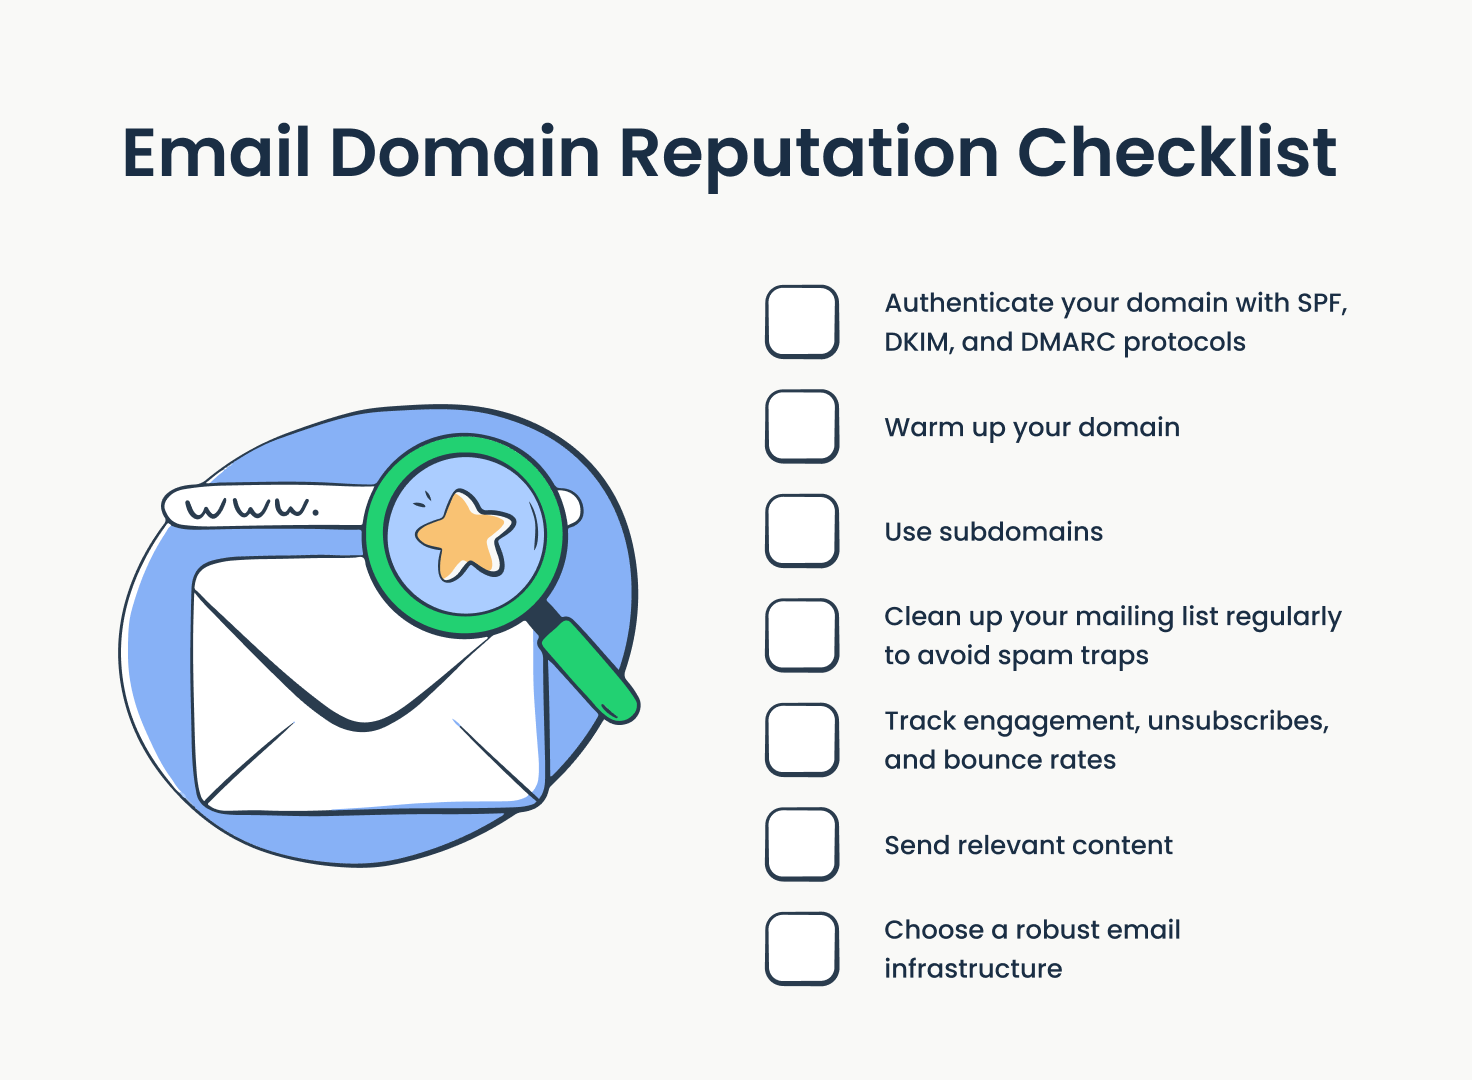 Email domain reputation checklist